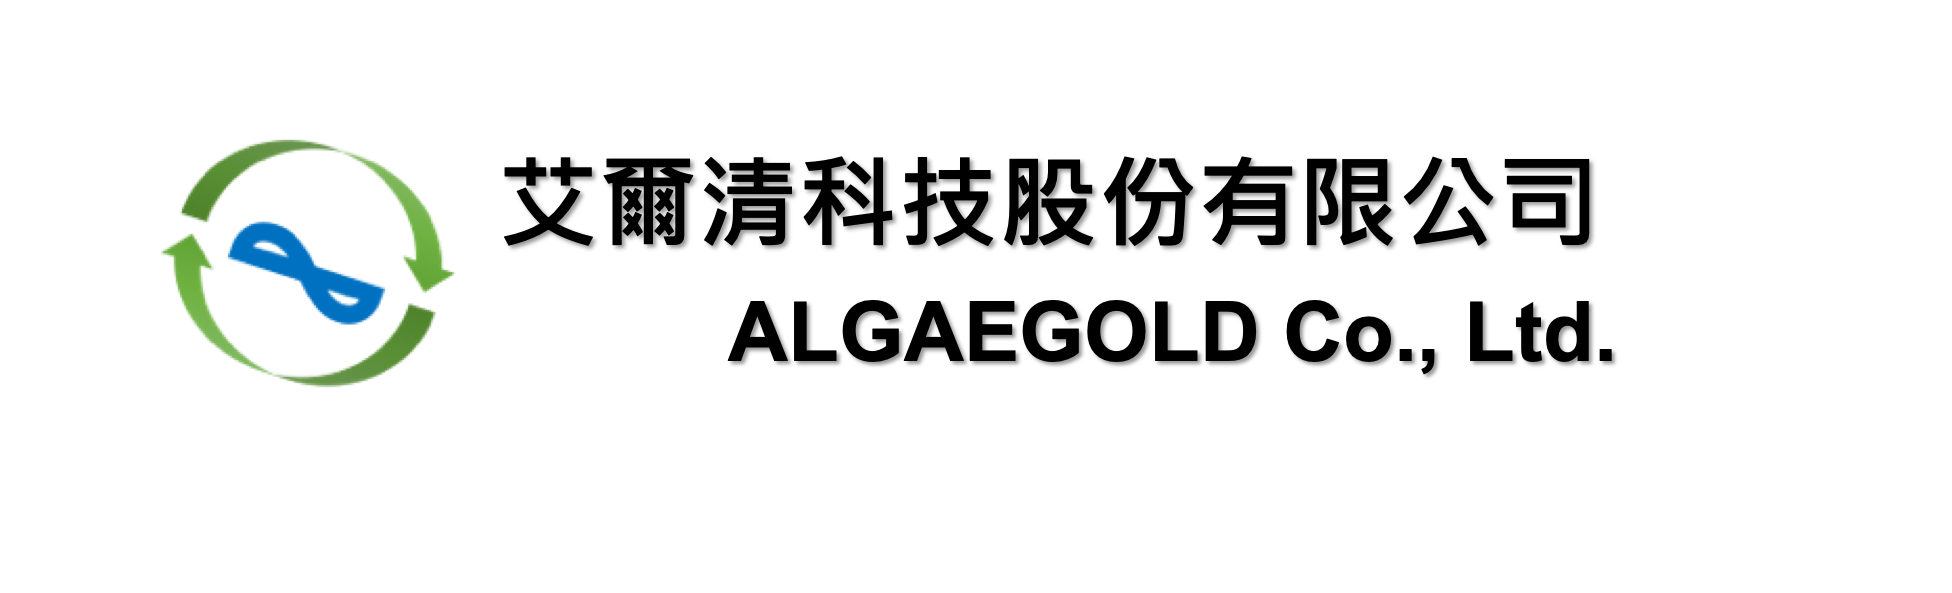 艾爾清 logo.png